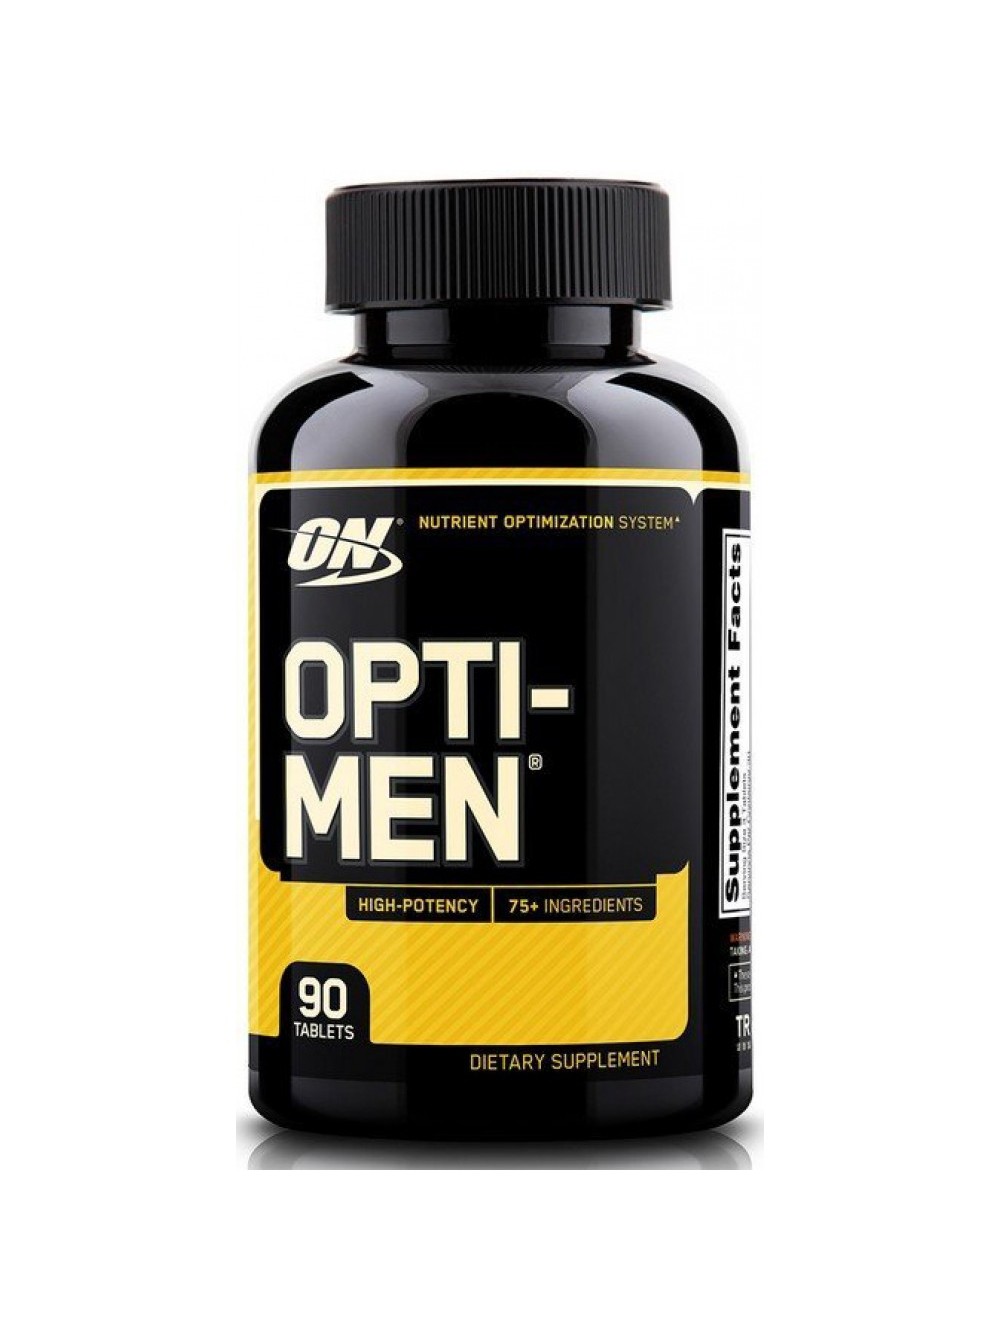 High potency vitamin. Optimum Nutrition Opti-men. Opti men 90. On Opti-men 90 Tab. Optimum Nutrition витамины.